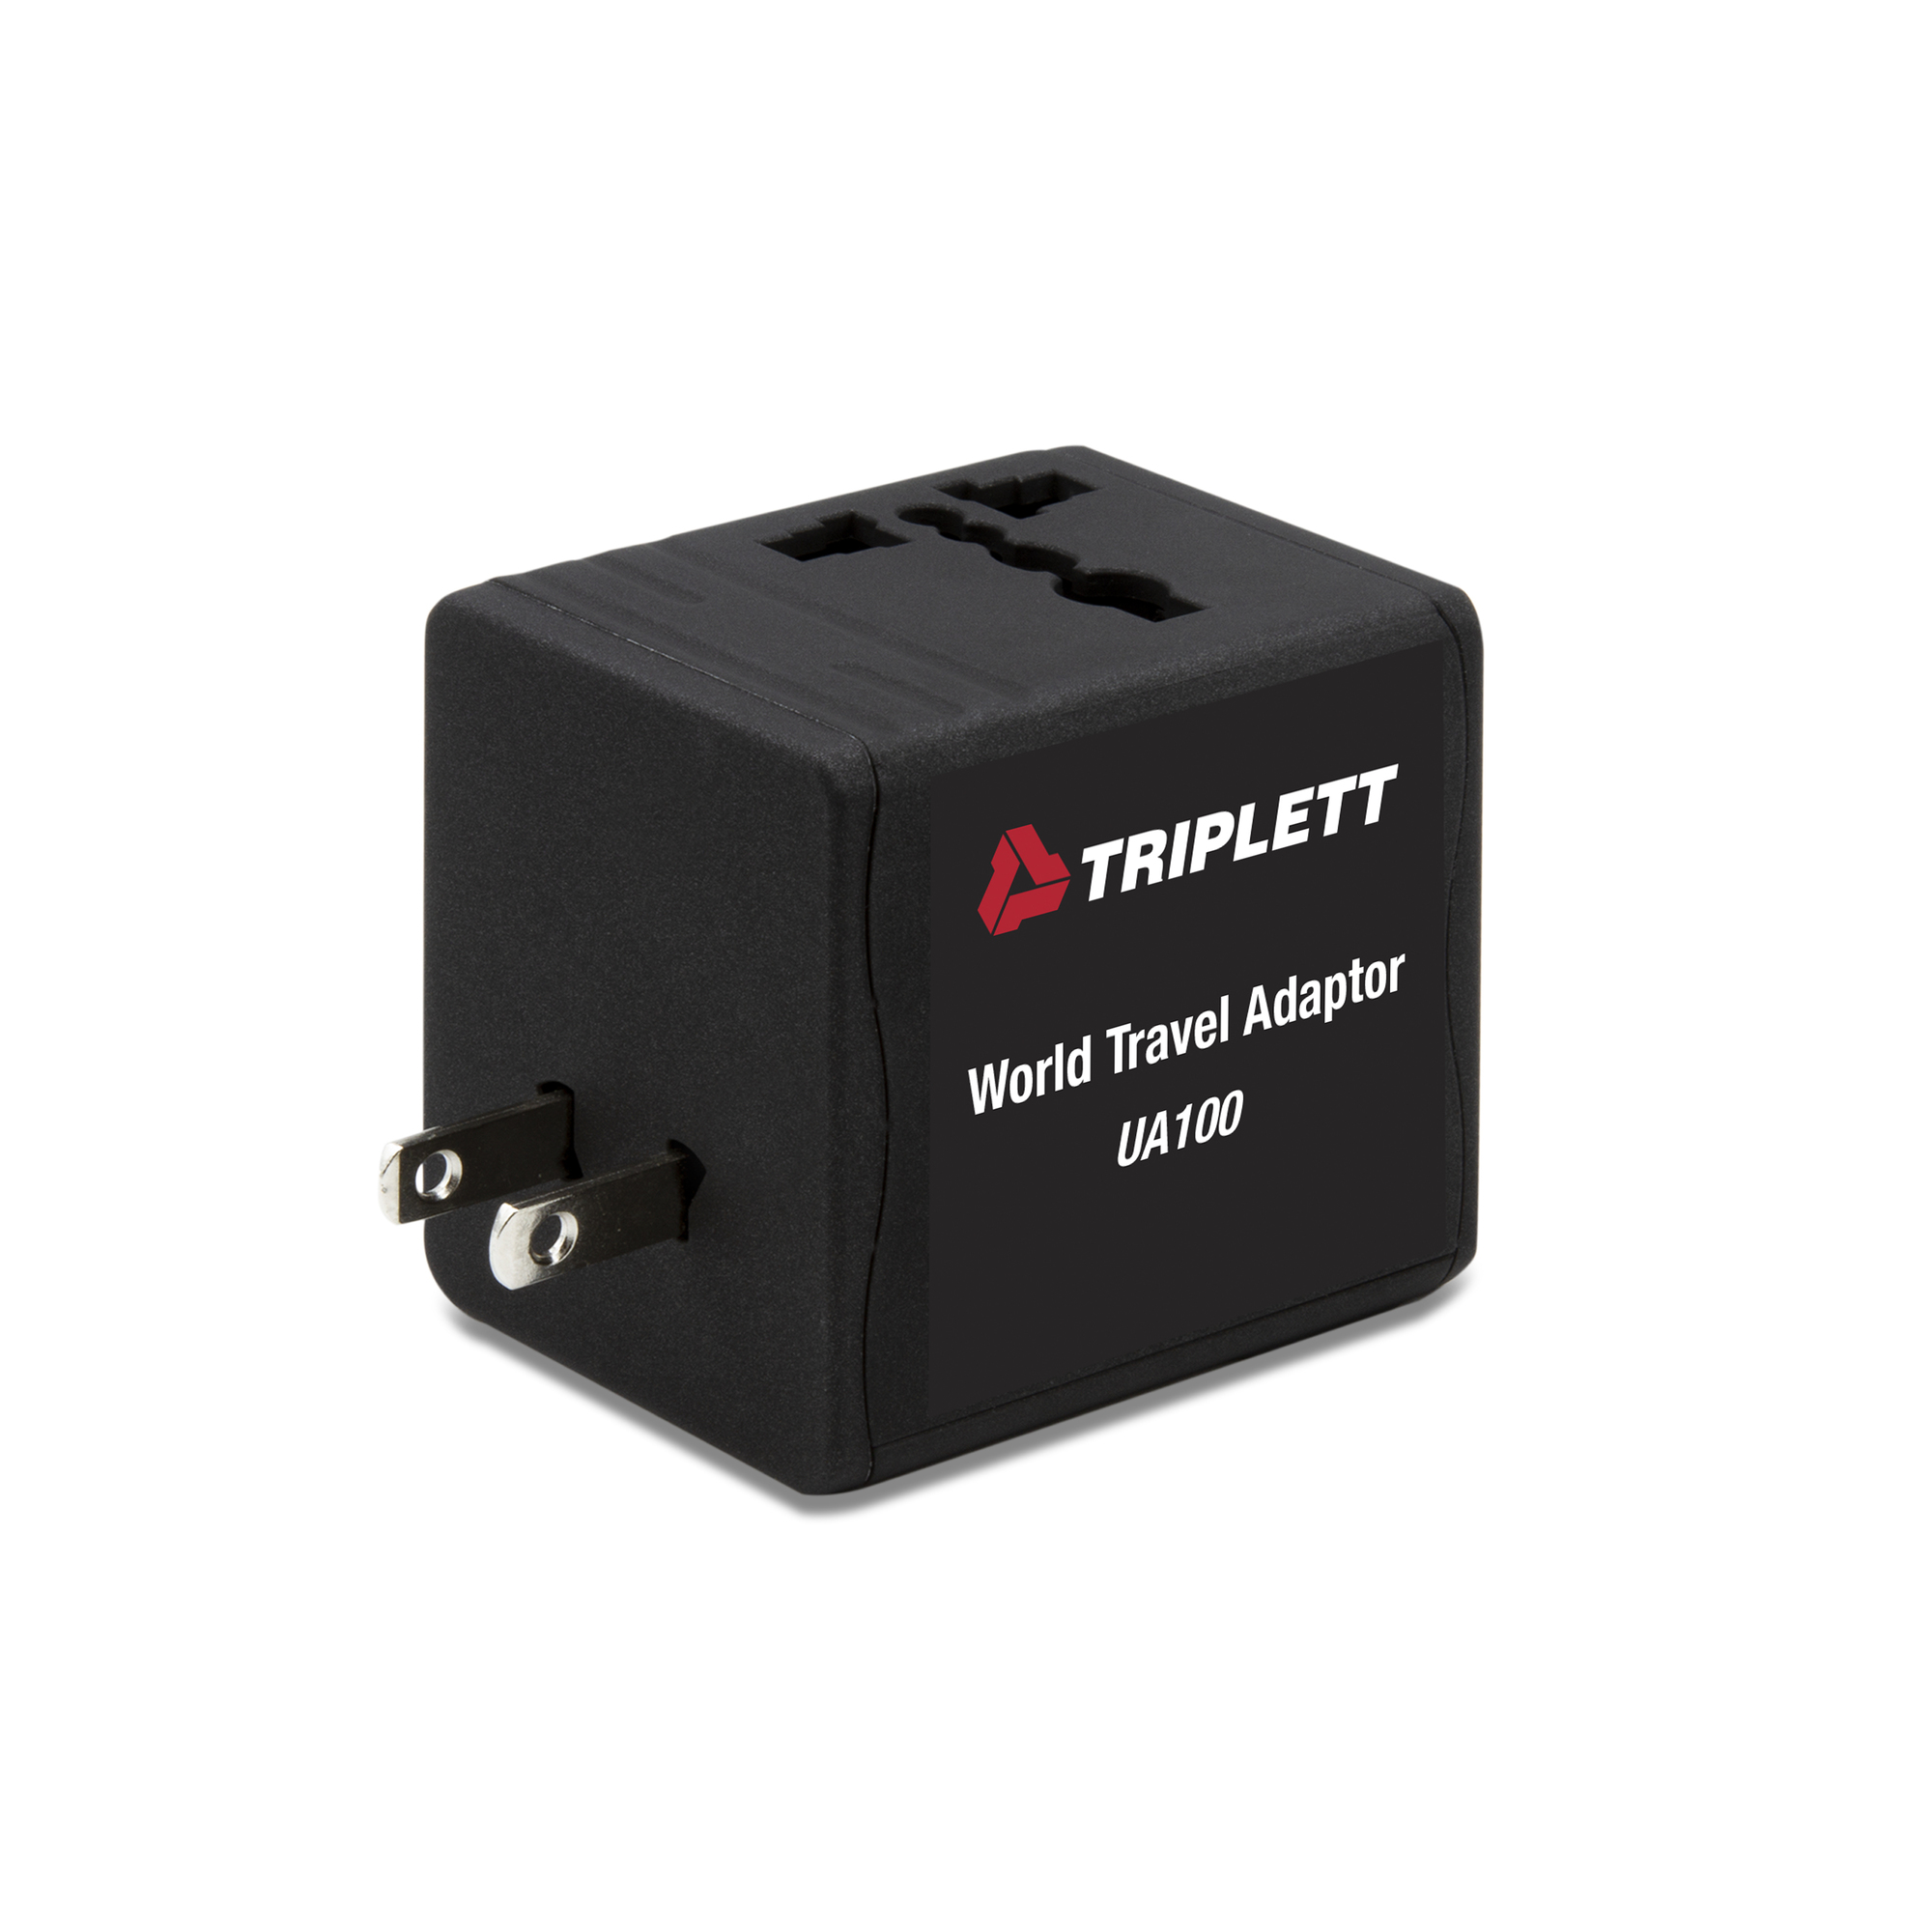 Triplett, Universal Power Adaptor / Worldwide Travel Adaptor, Model UA100